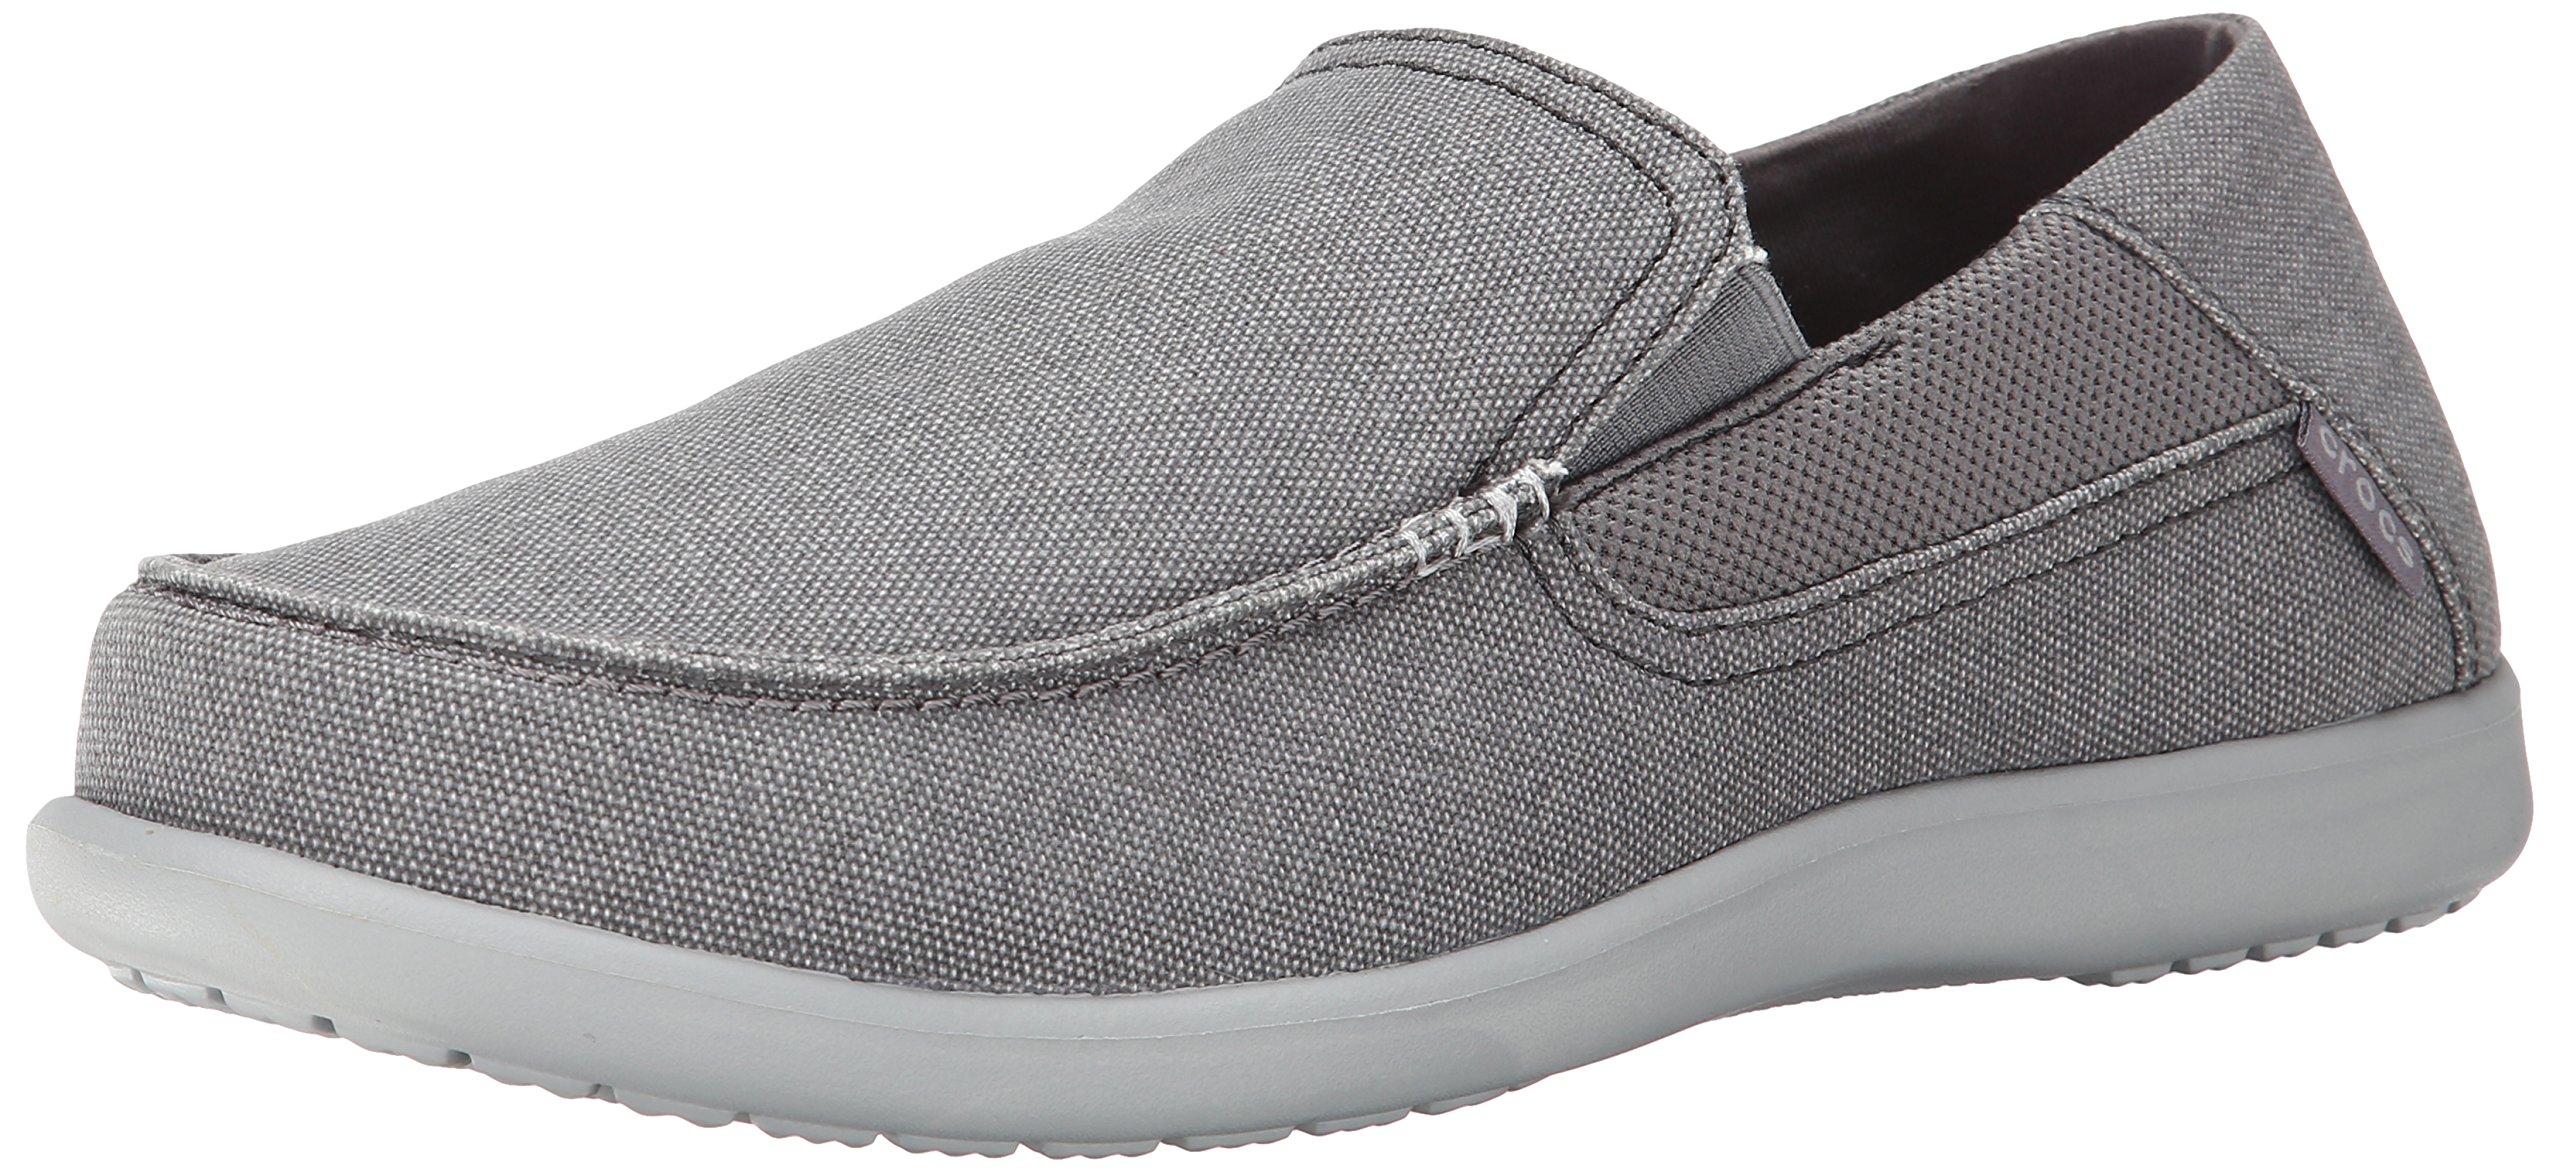 Crocs™ Santa Cruz 2 Luxe Loafer Slip-on in Charcoal/Light Grey (Gray ...